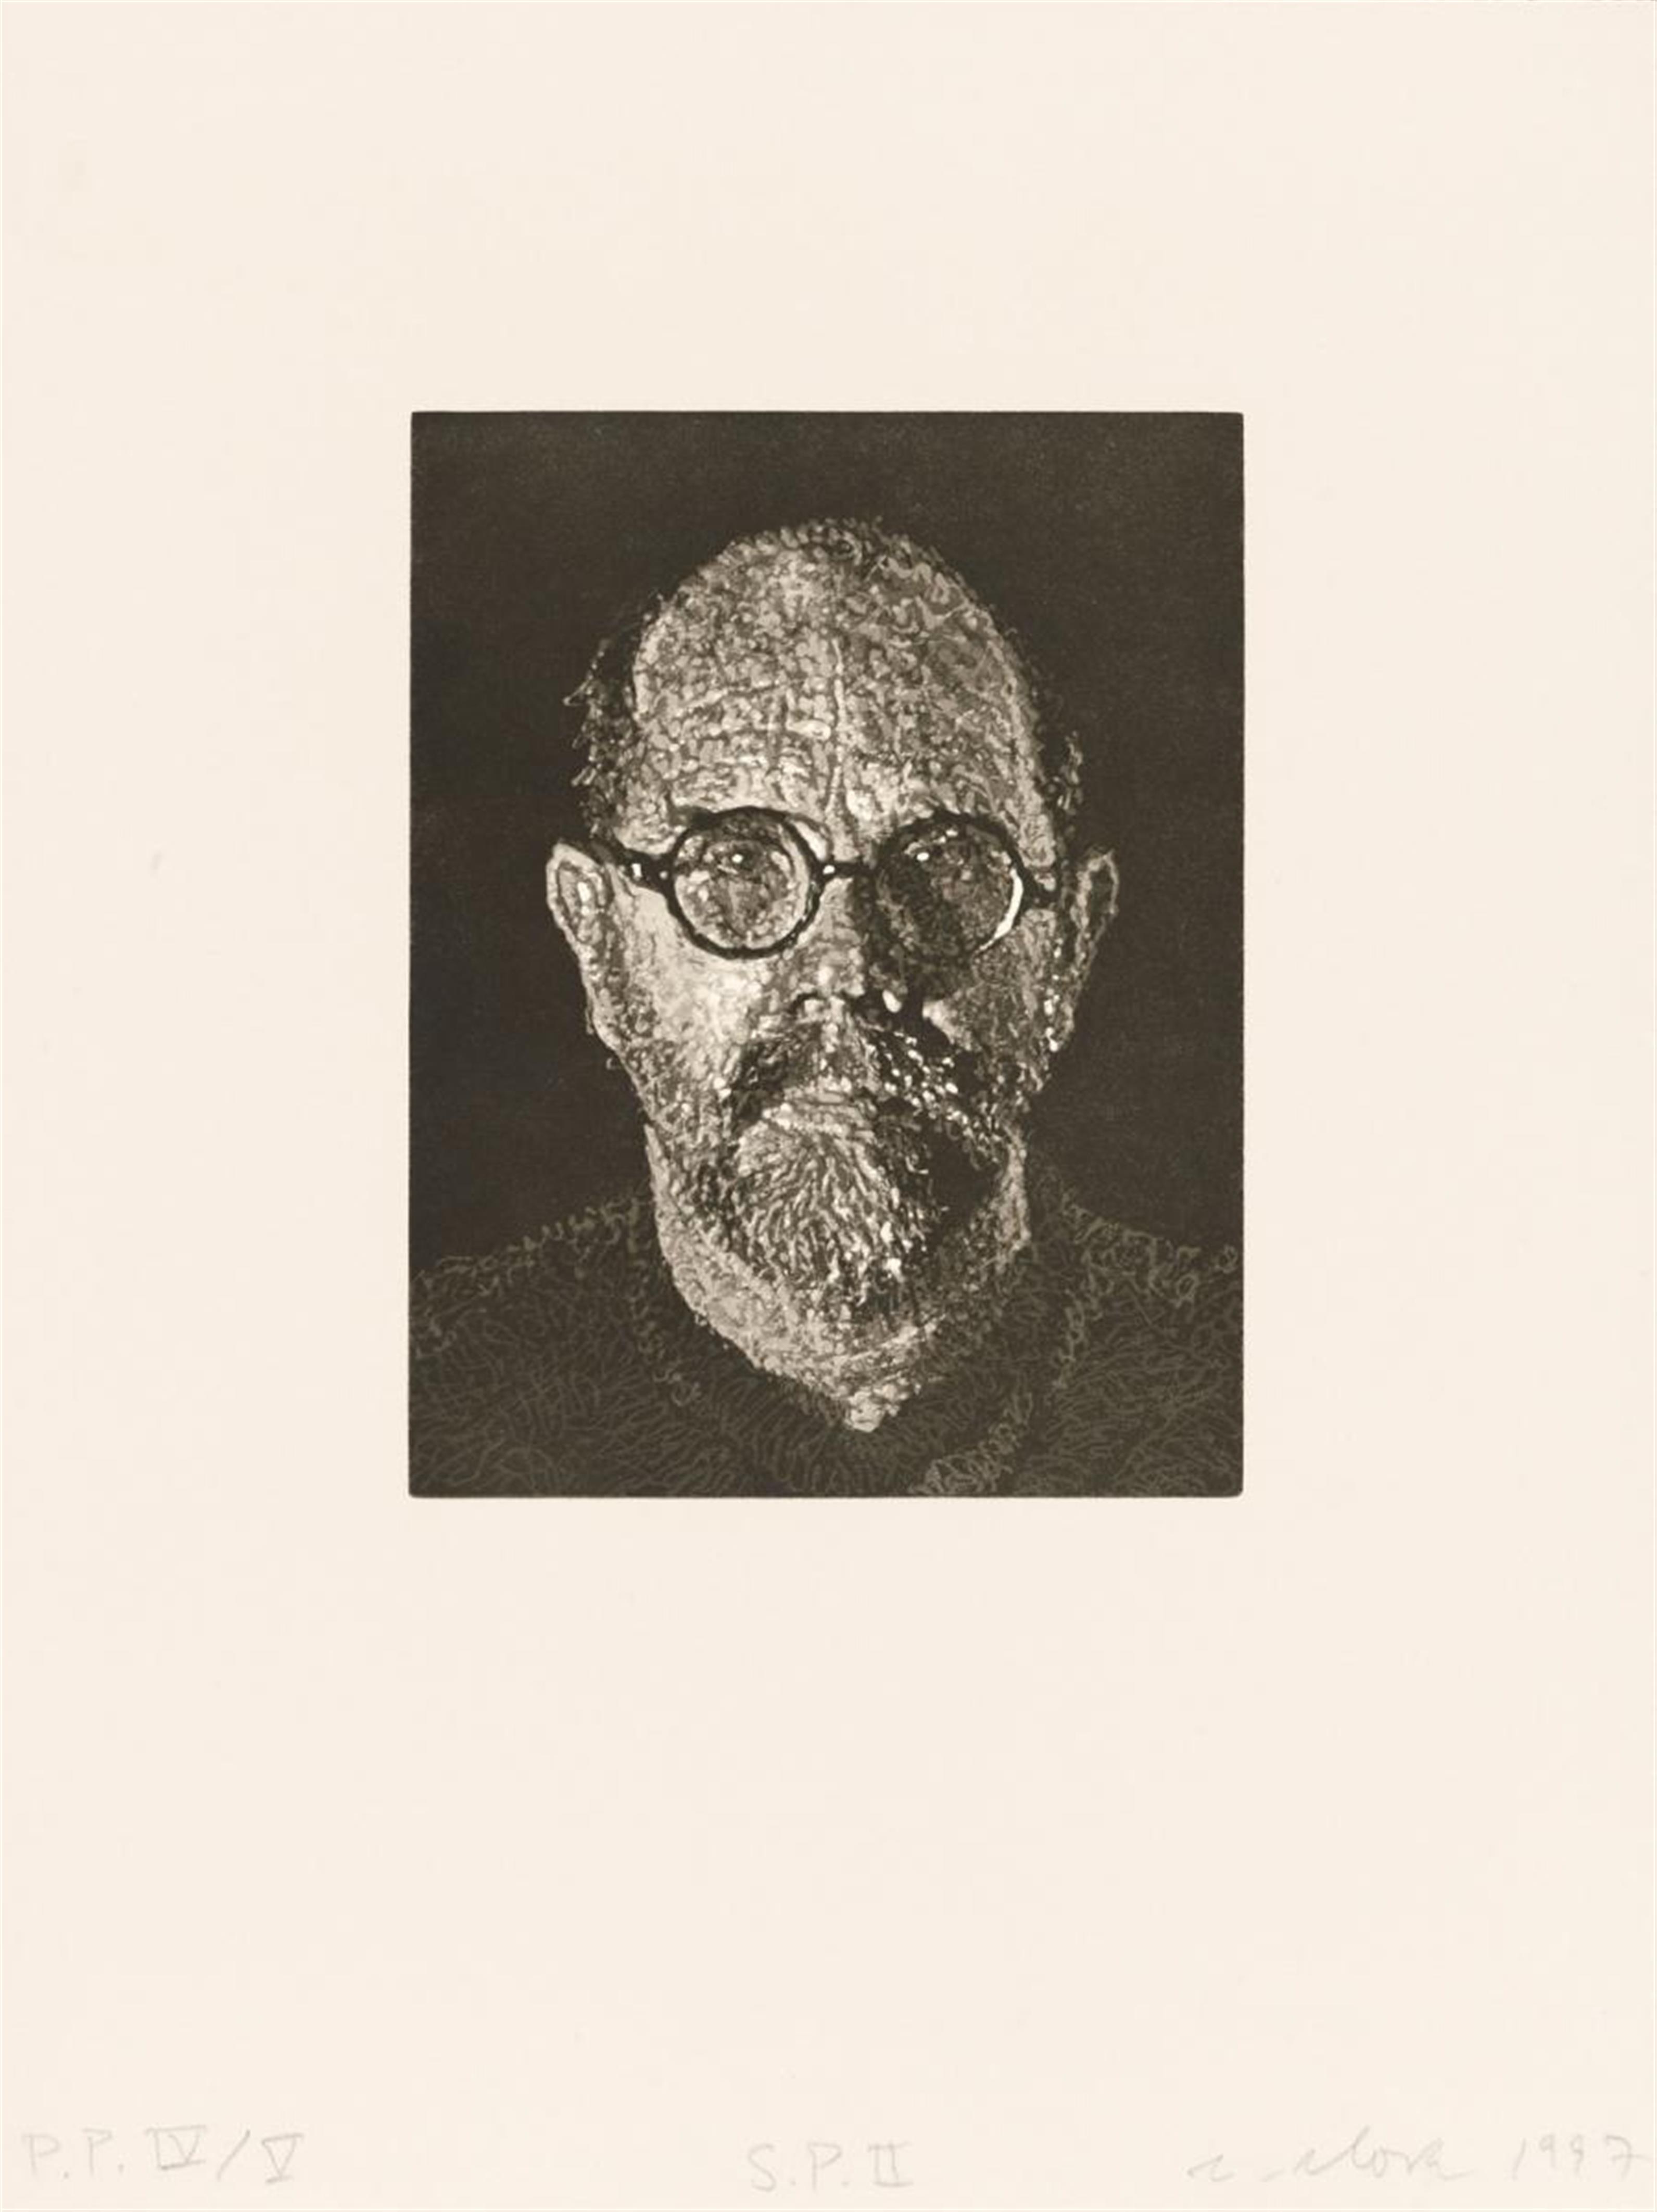 Chuck Close - S.P. I,II,III (Self Portrait) - image-2